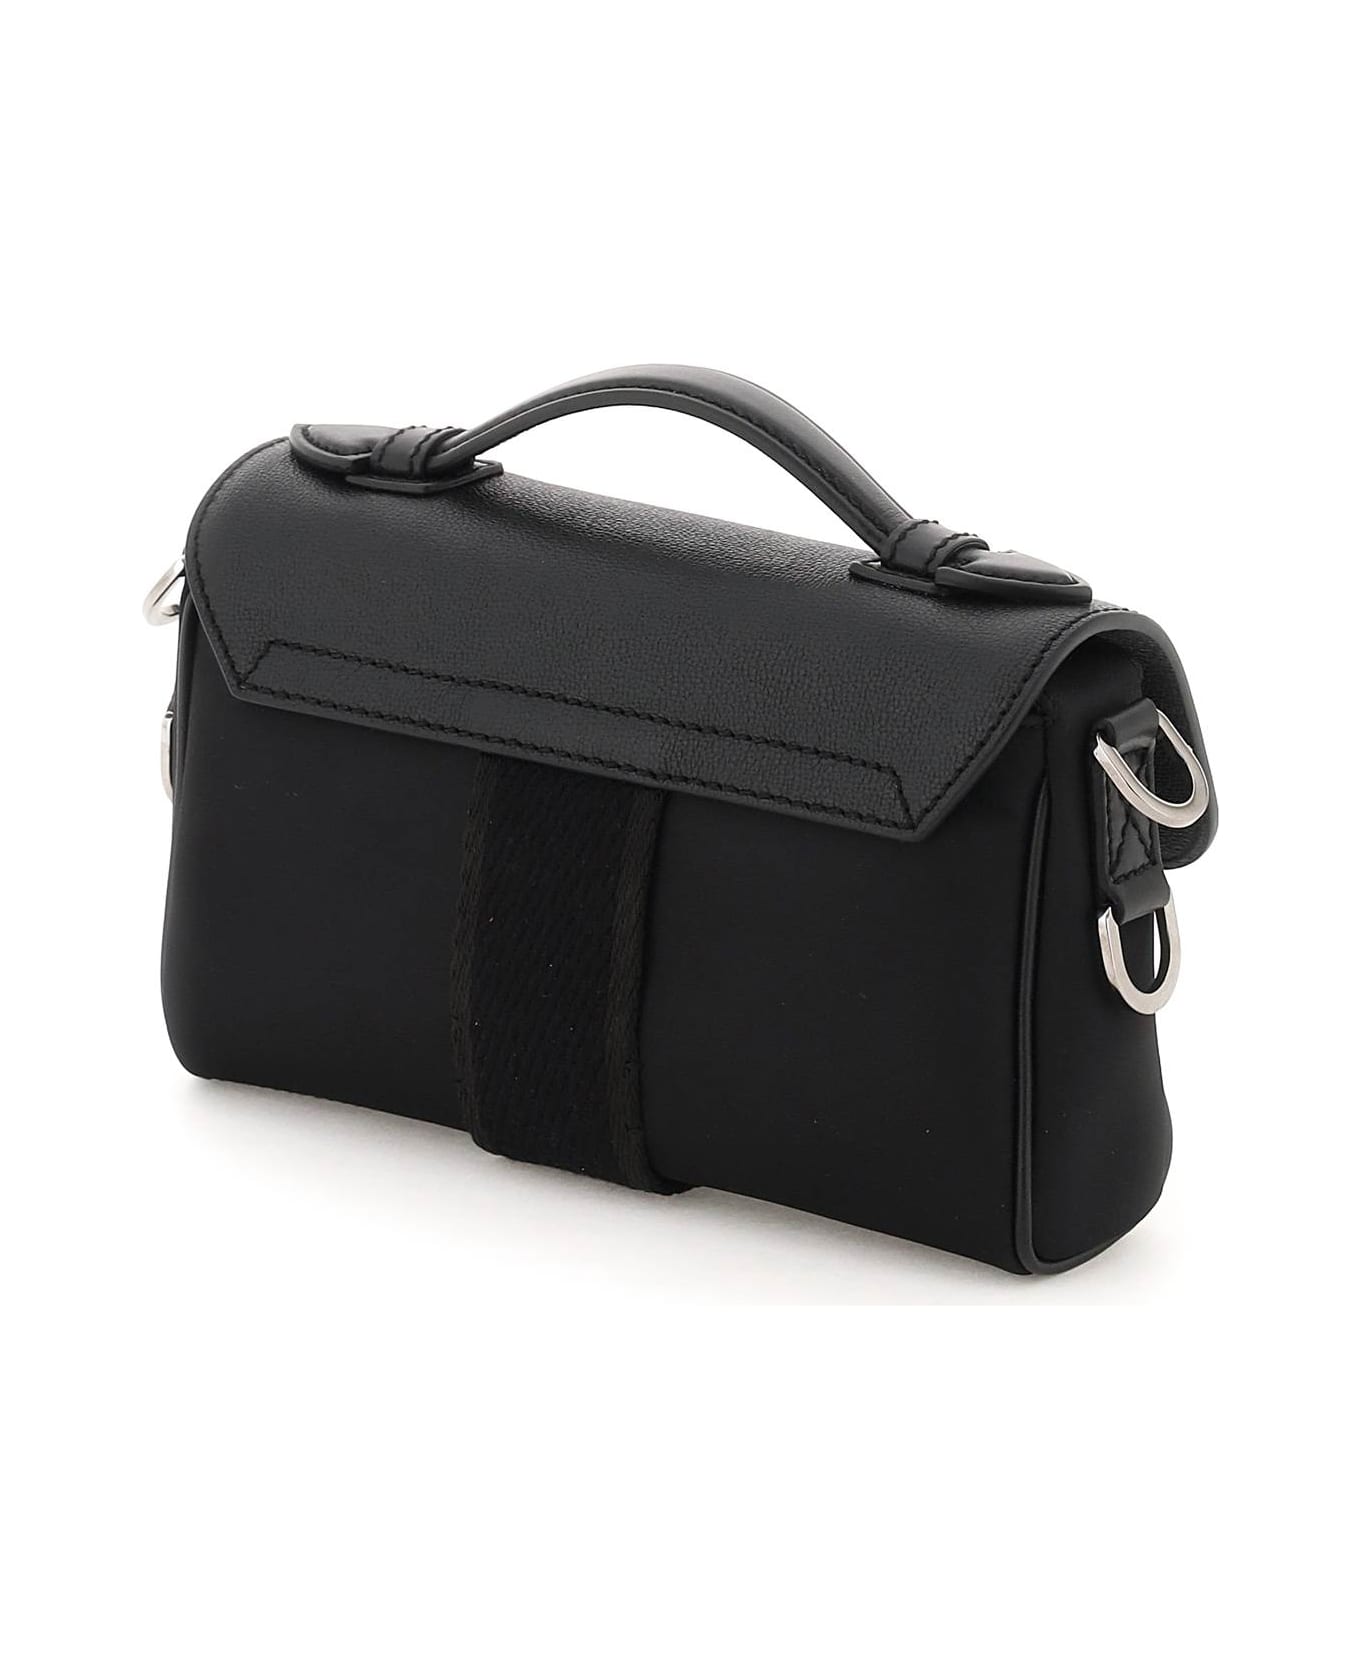 Dolce & Gabbana Handbag - NERO NERO (Black)